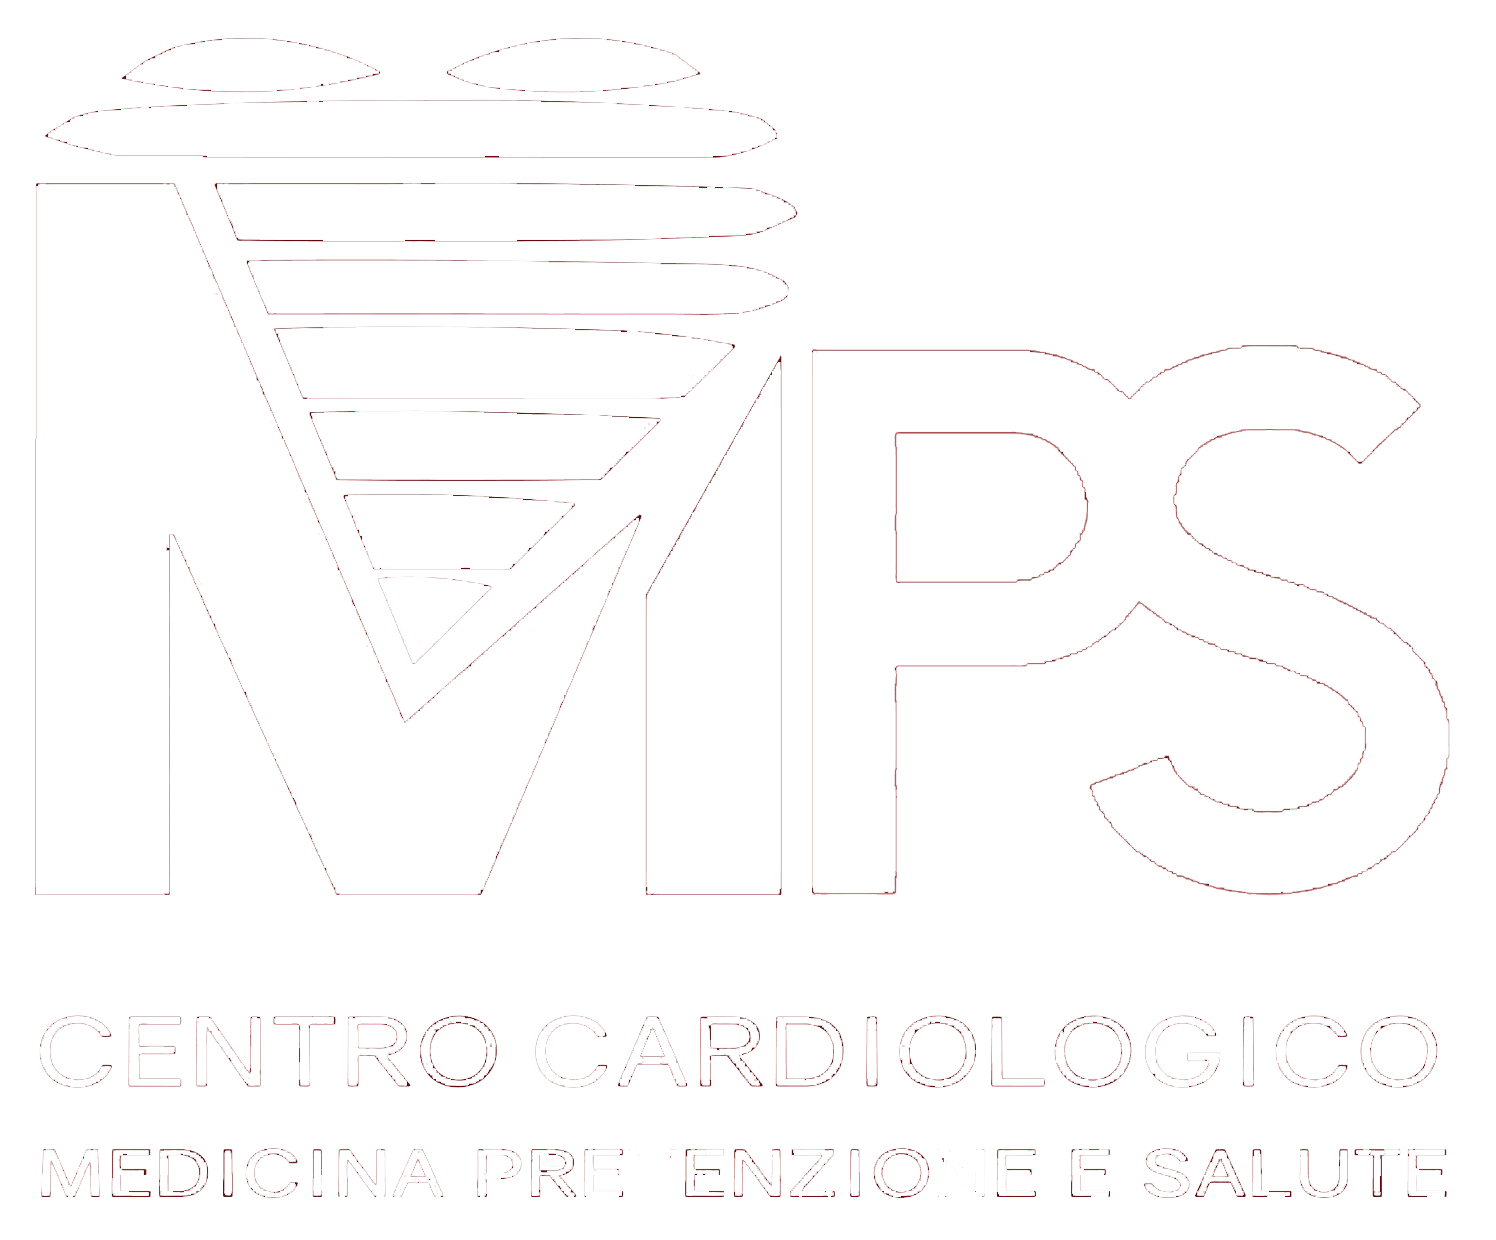 Centro Cardiologico M.P.S. - LOGO